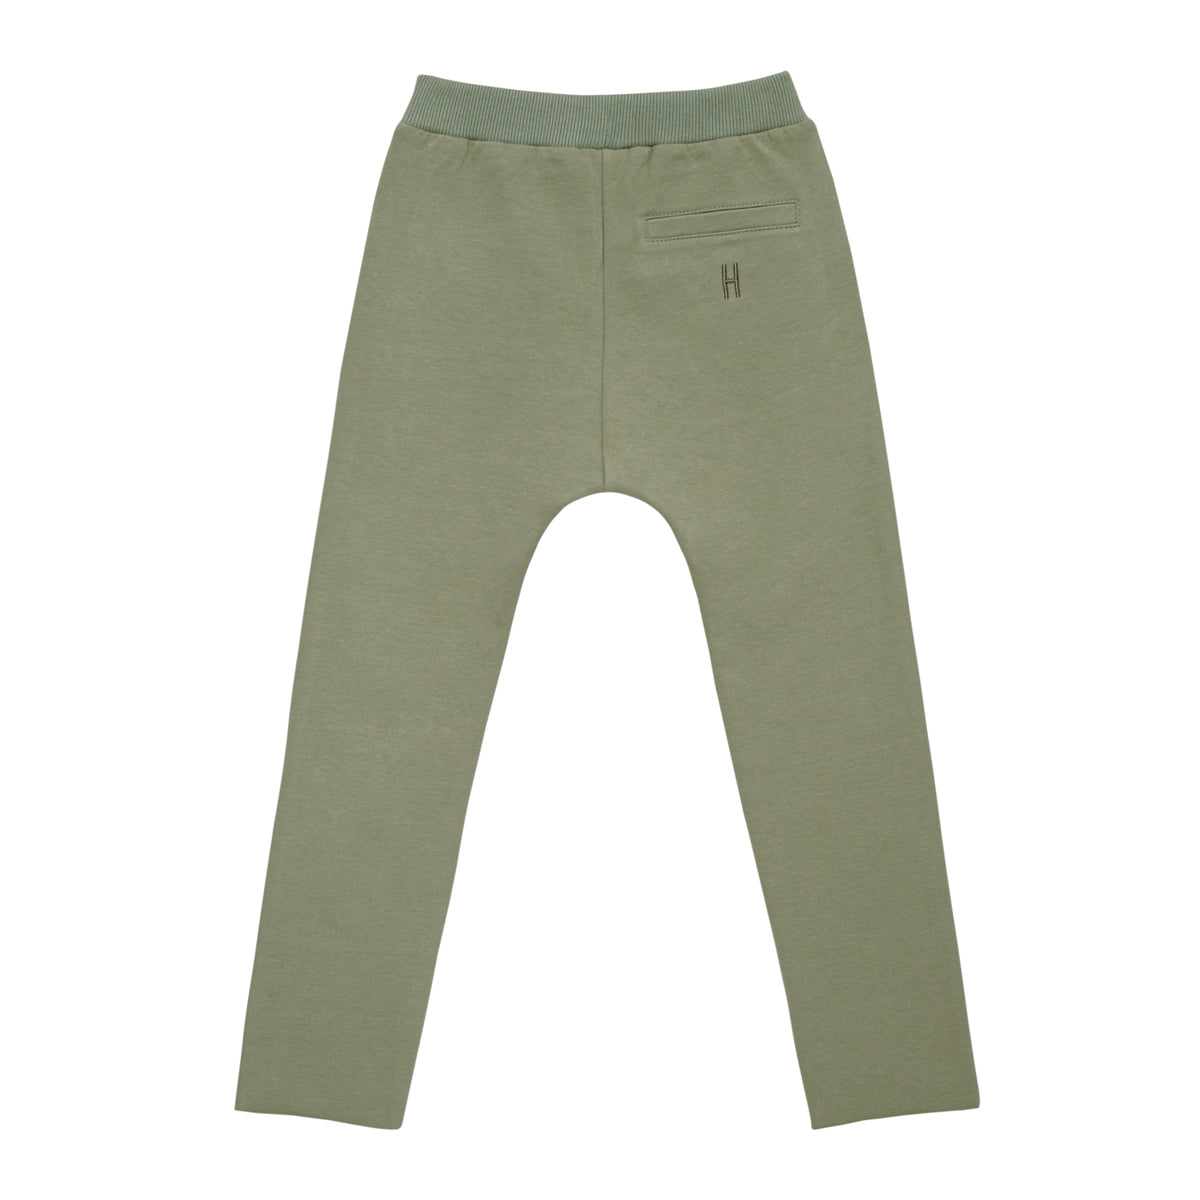 LITTLE HEDONIST - Pantalon vert confortable ample neuf - 3 mois